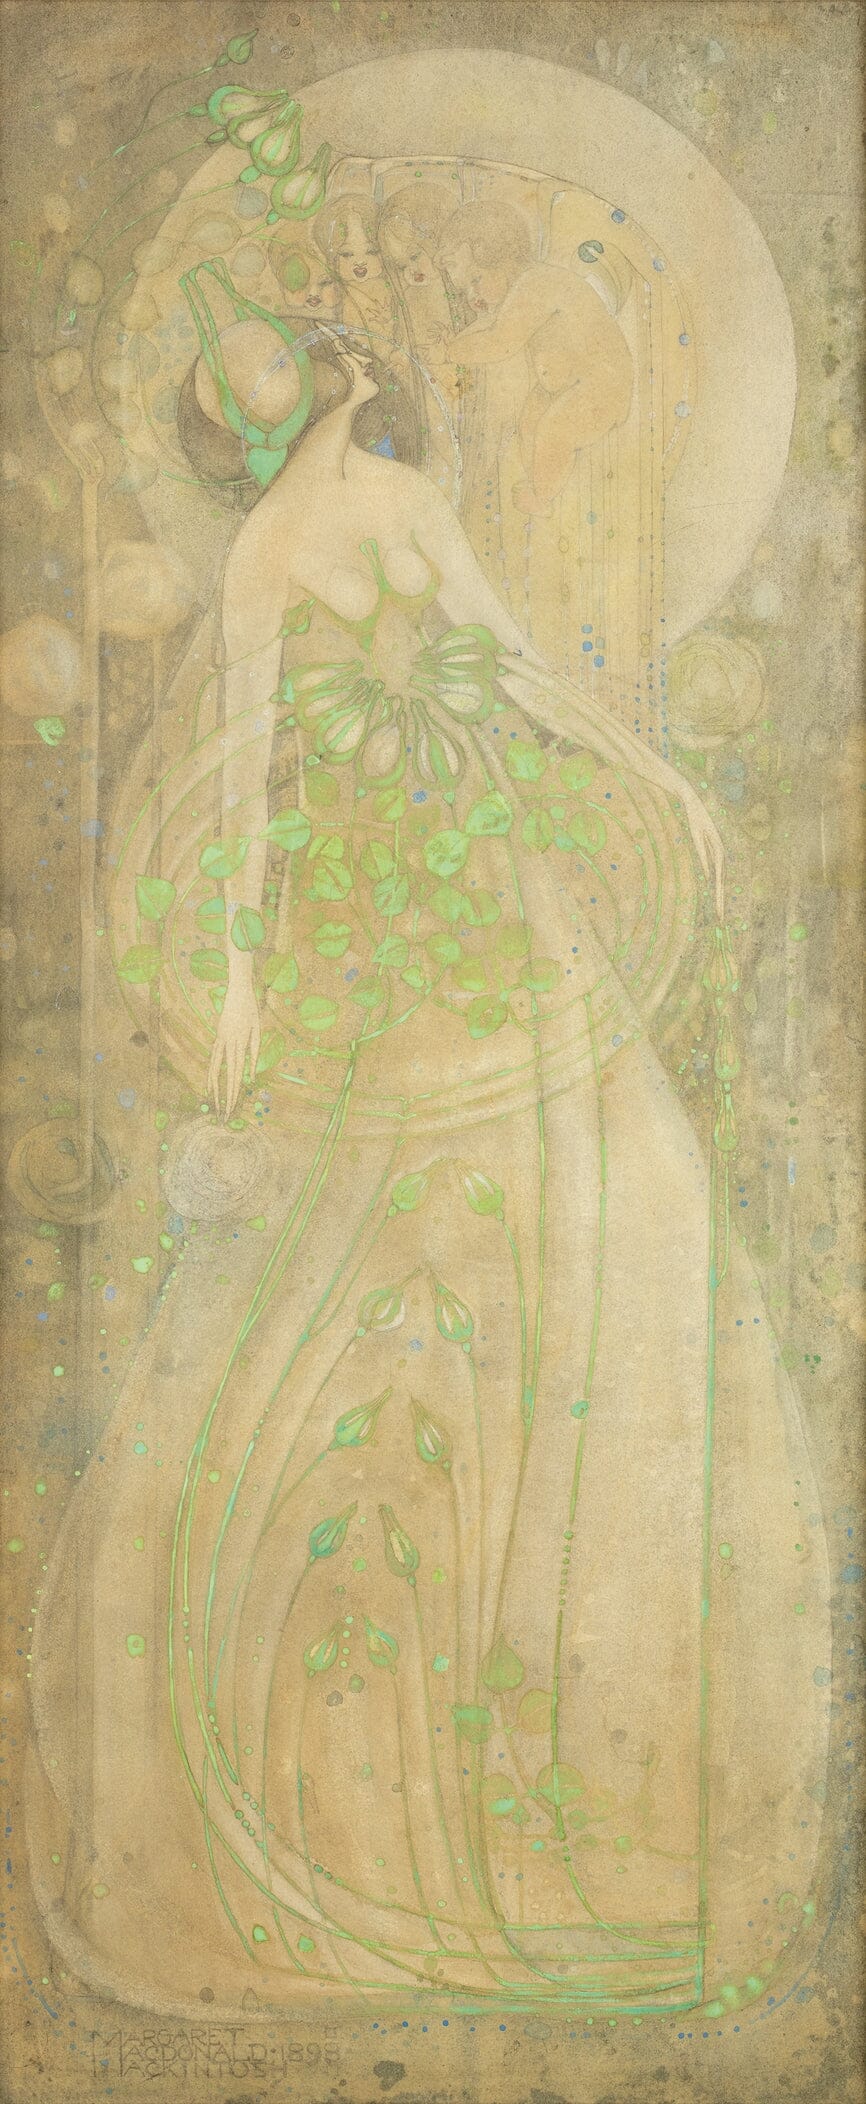 Junirosen (June roses) (1900) | Art nouveau prints | Margaret Macdonald-Mackintosh Posters, Prints, & Visual Artwork The Trumpet Shop Vintage Prints   